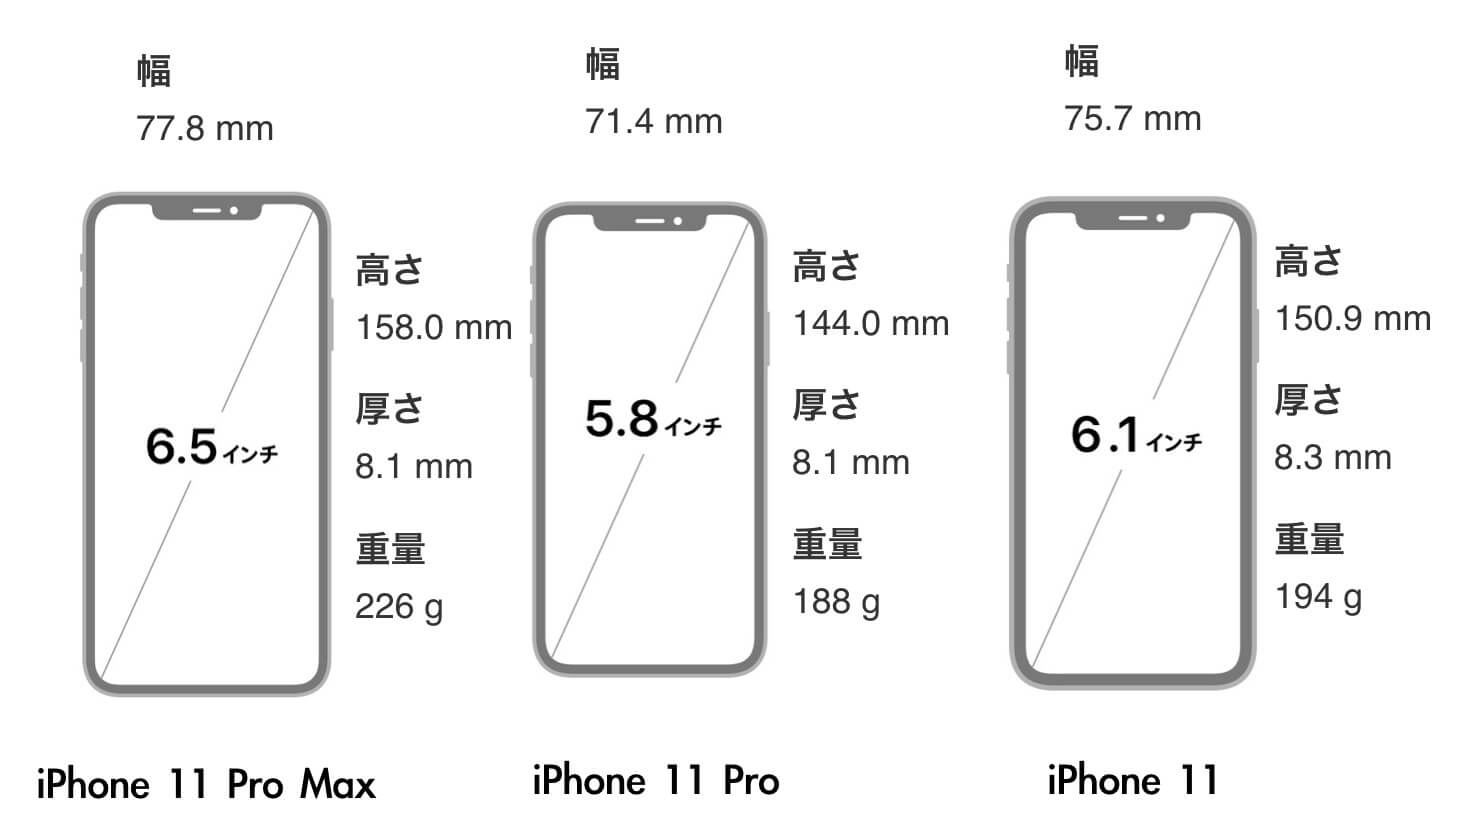 Iphone диагонали экрана. Iphone 11 Pro Max размер дисплея. Iphone 11 Pro размер в дюймах. Айфон 11 размер экрана в сантиметрах. Айфон 11 габариты диагональ.